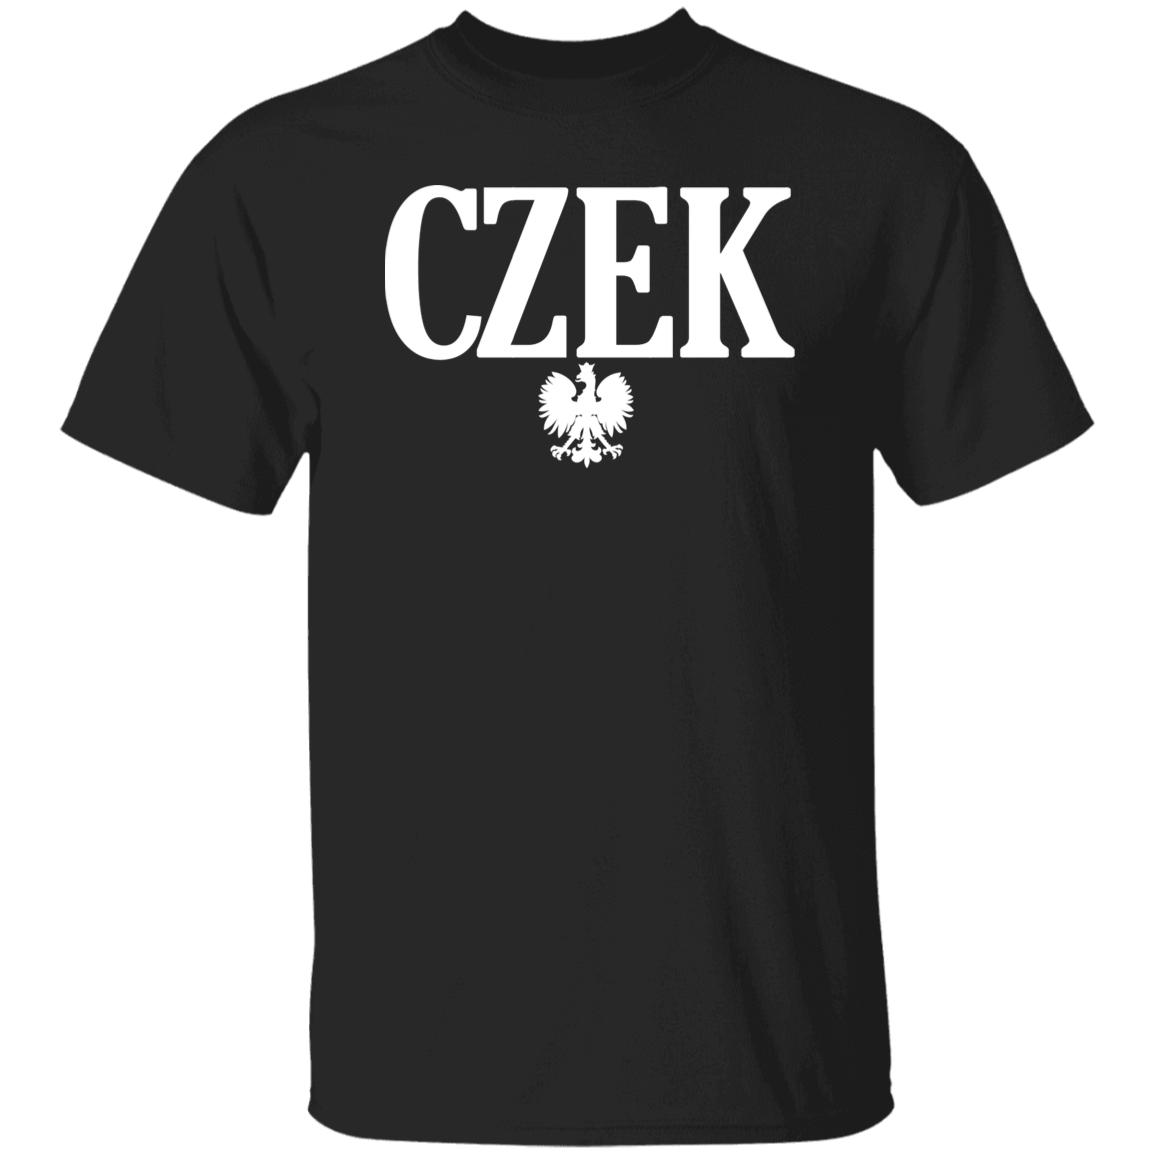 CZEK Polish Surname Ending Apparel CustomCat G500 5.3 oz. T-Shirt Black S